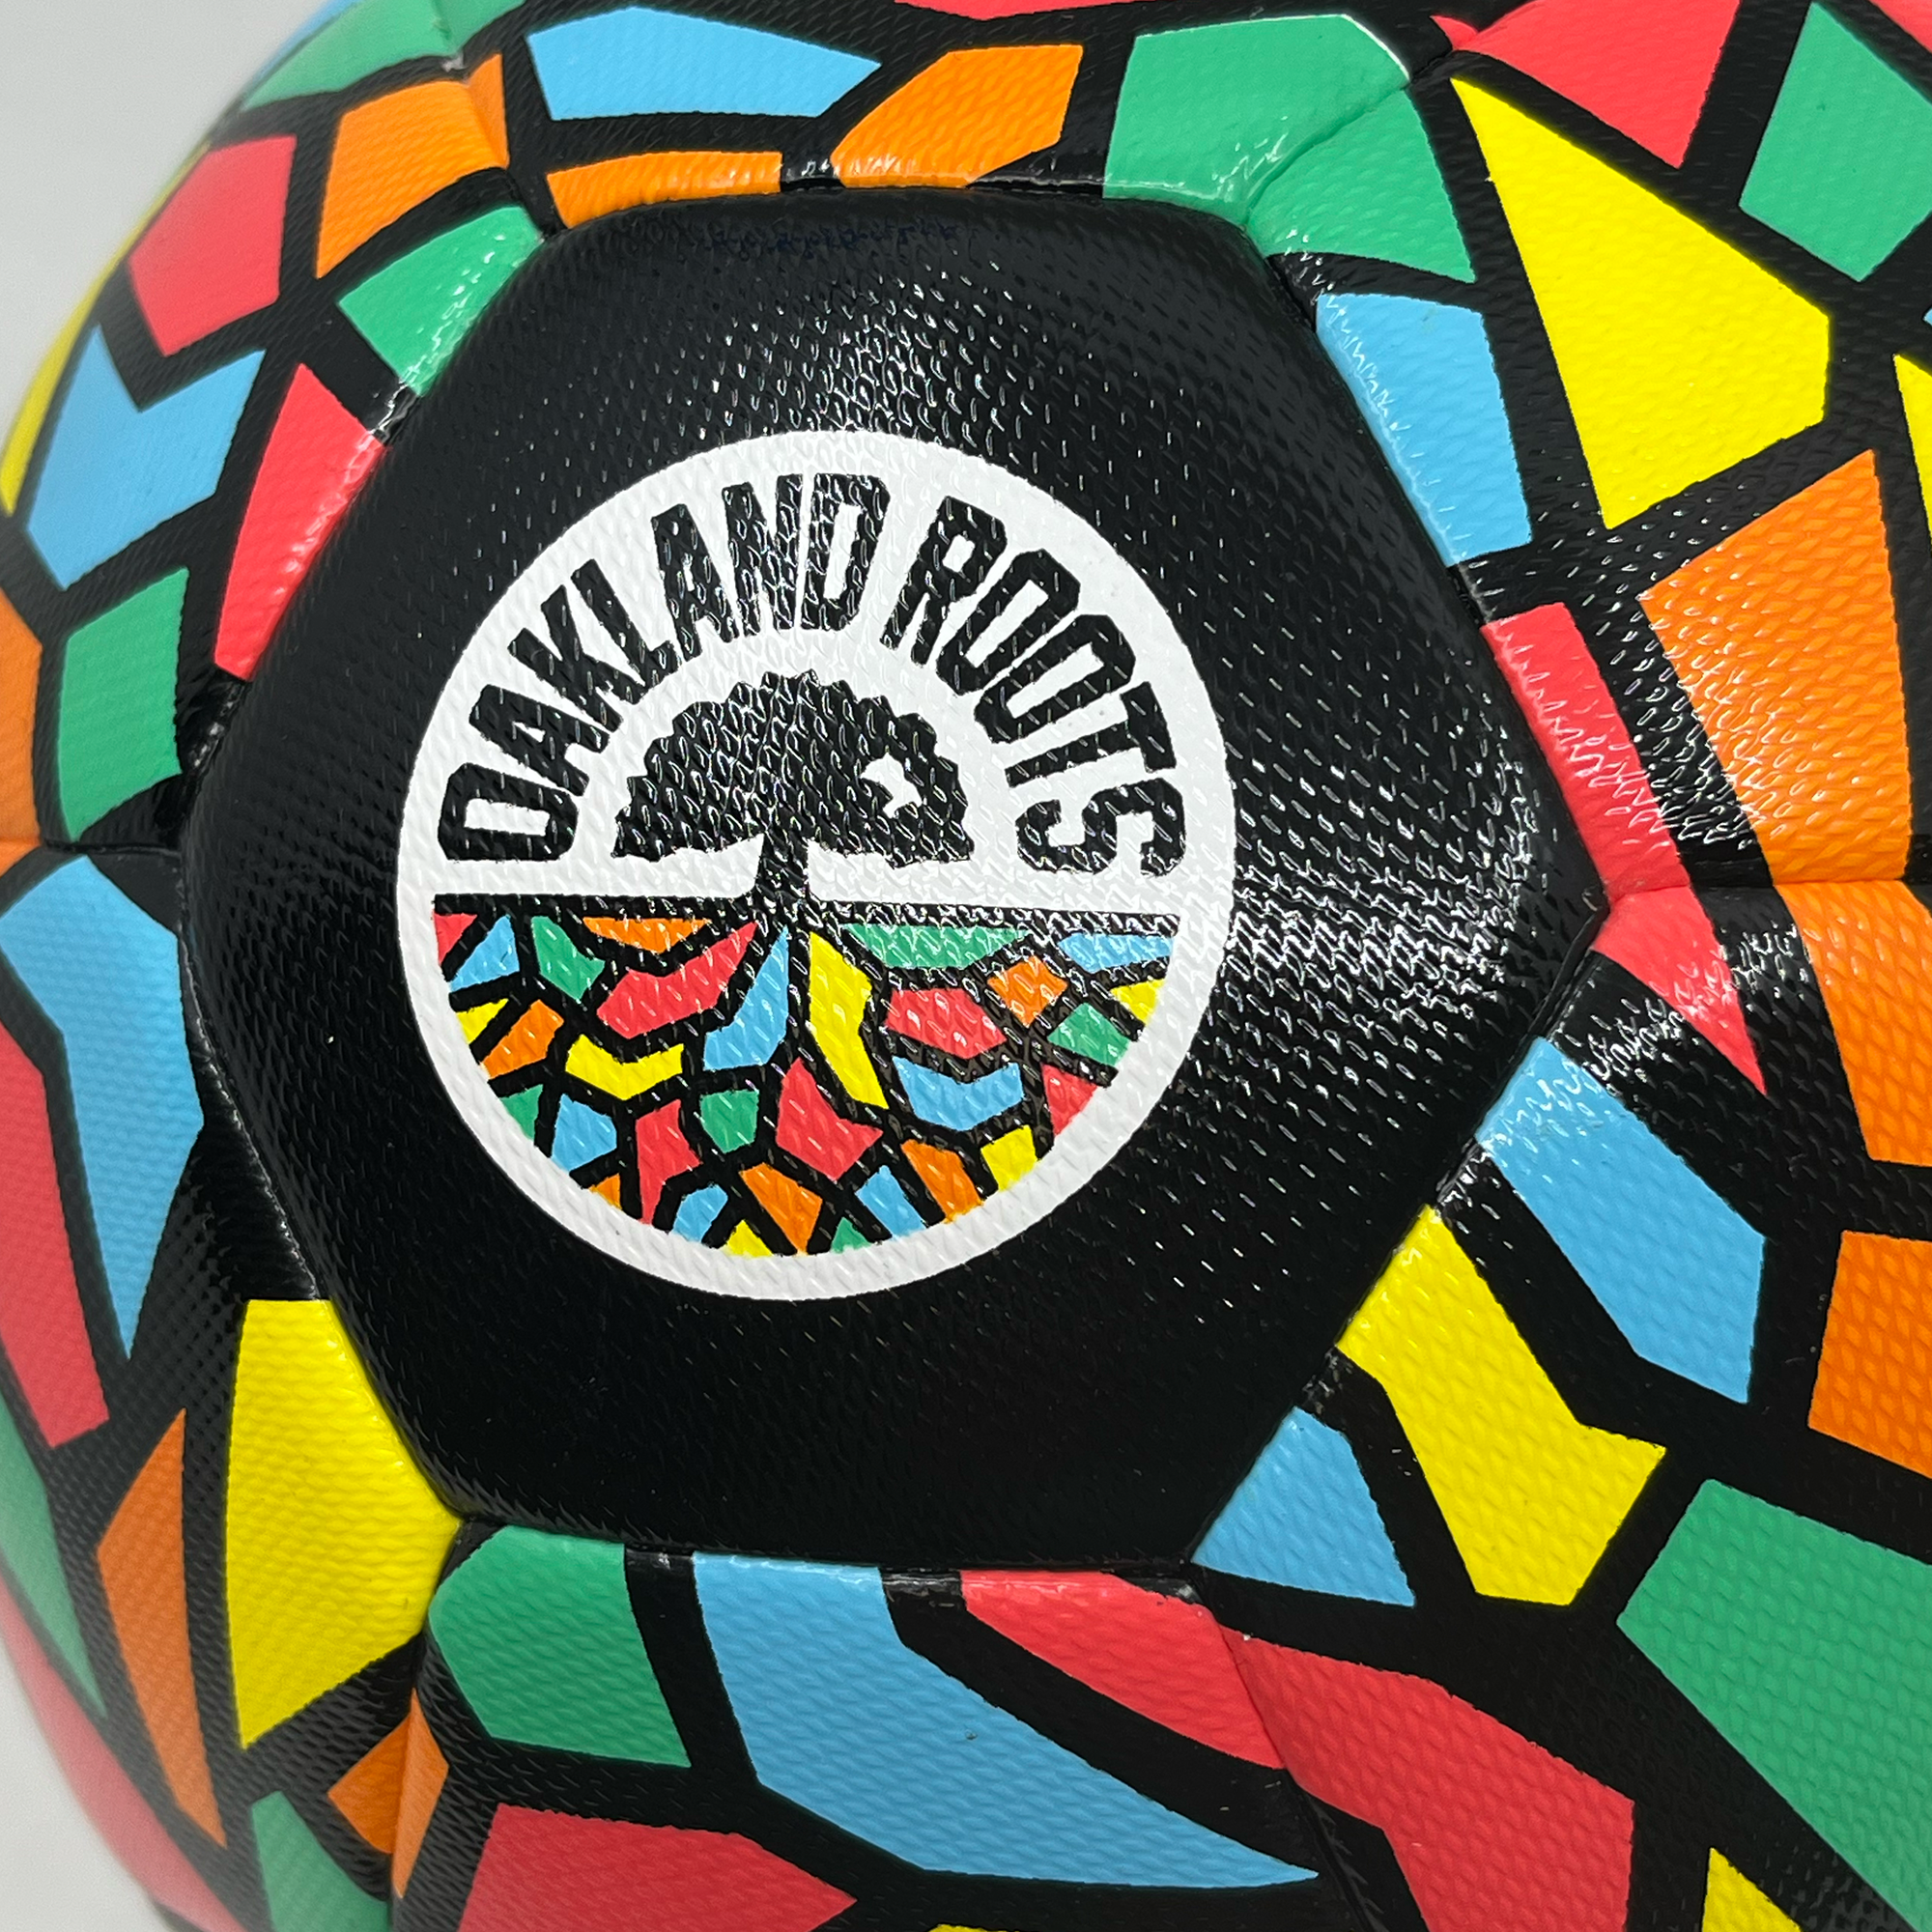 Detail shot of Oakland Roots SC logo on soccer ball.